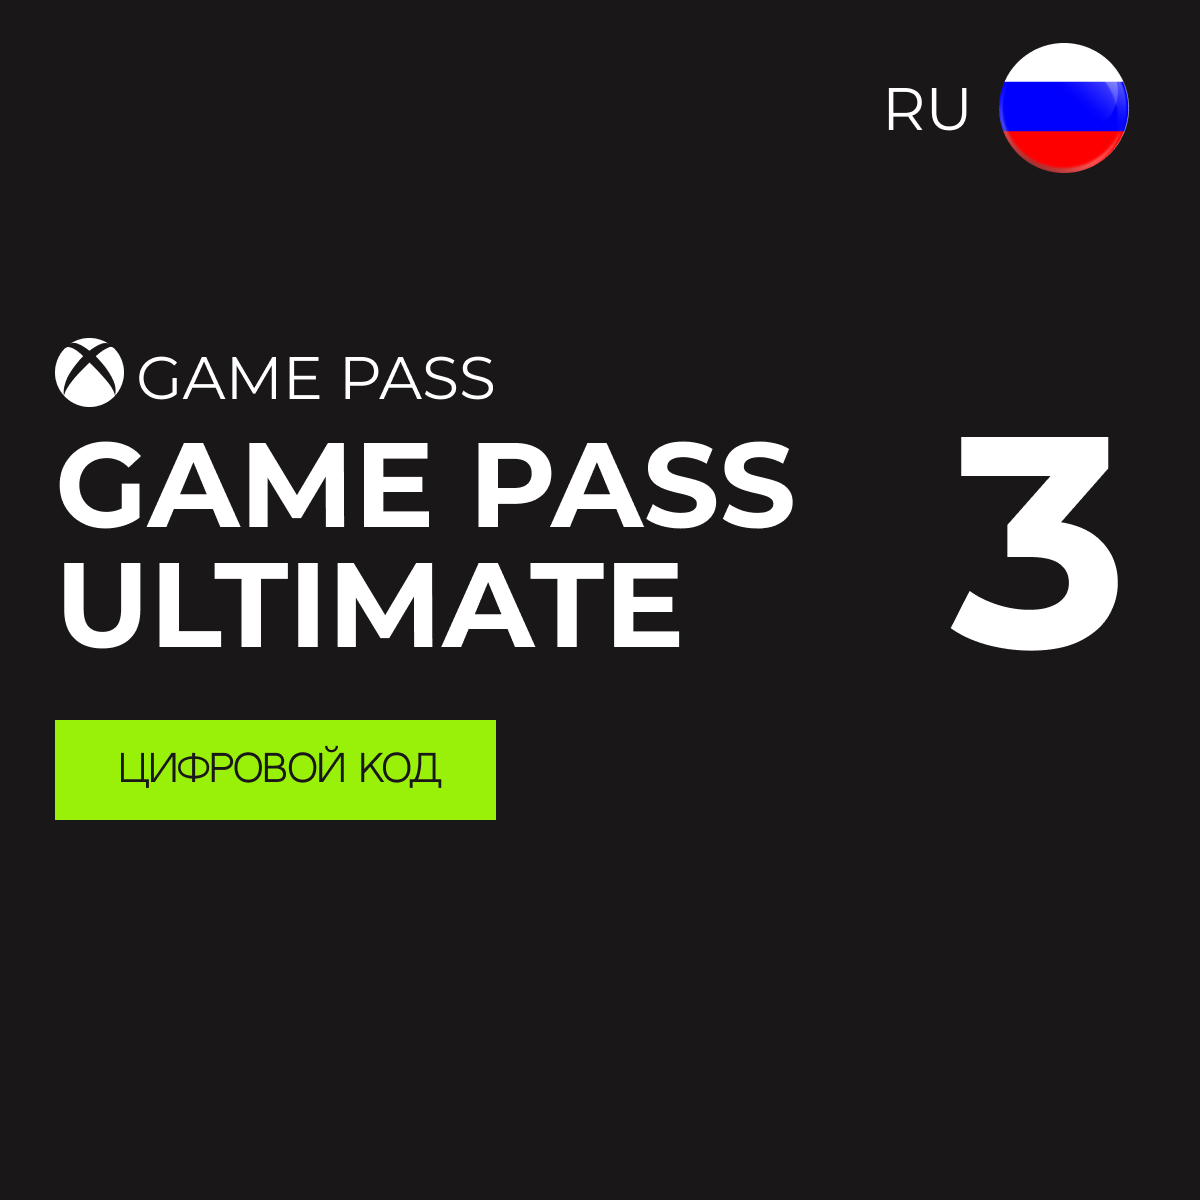 Xbox Подписка Xbox Game Pass Ultimate на 3 месяца (Цифровая версия регион активации - Россия)